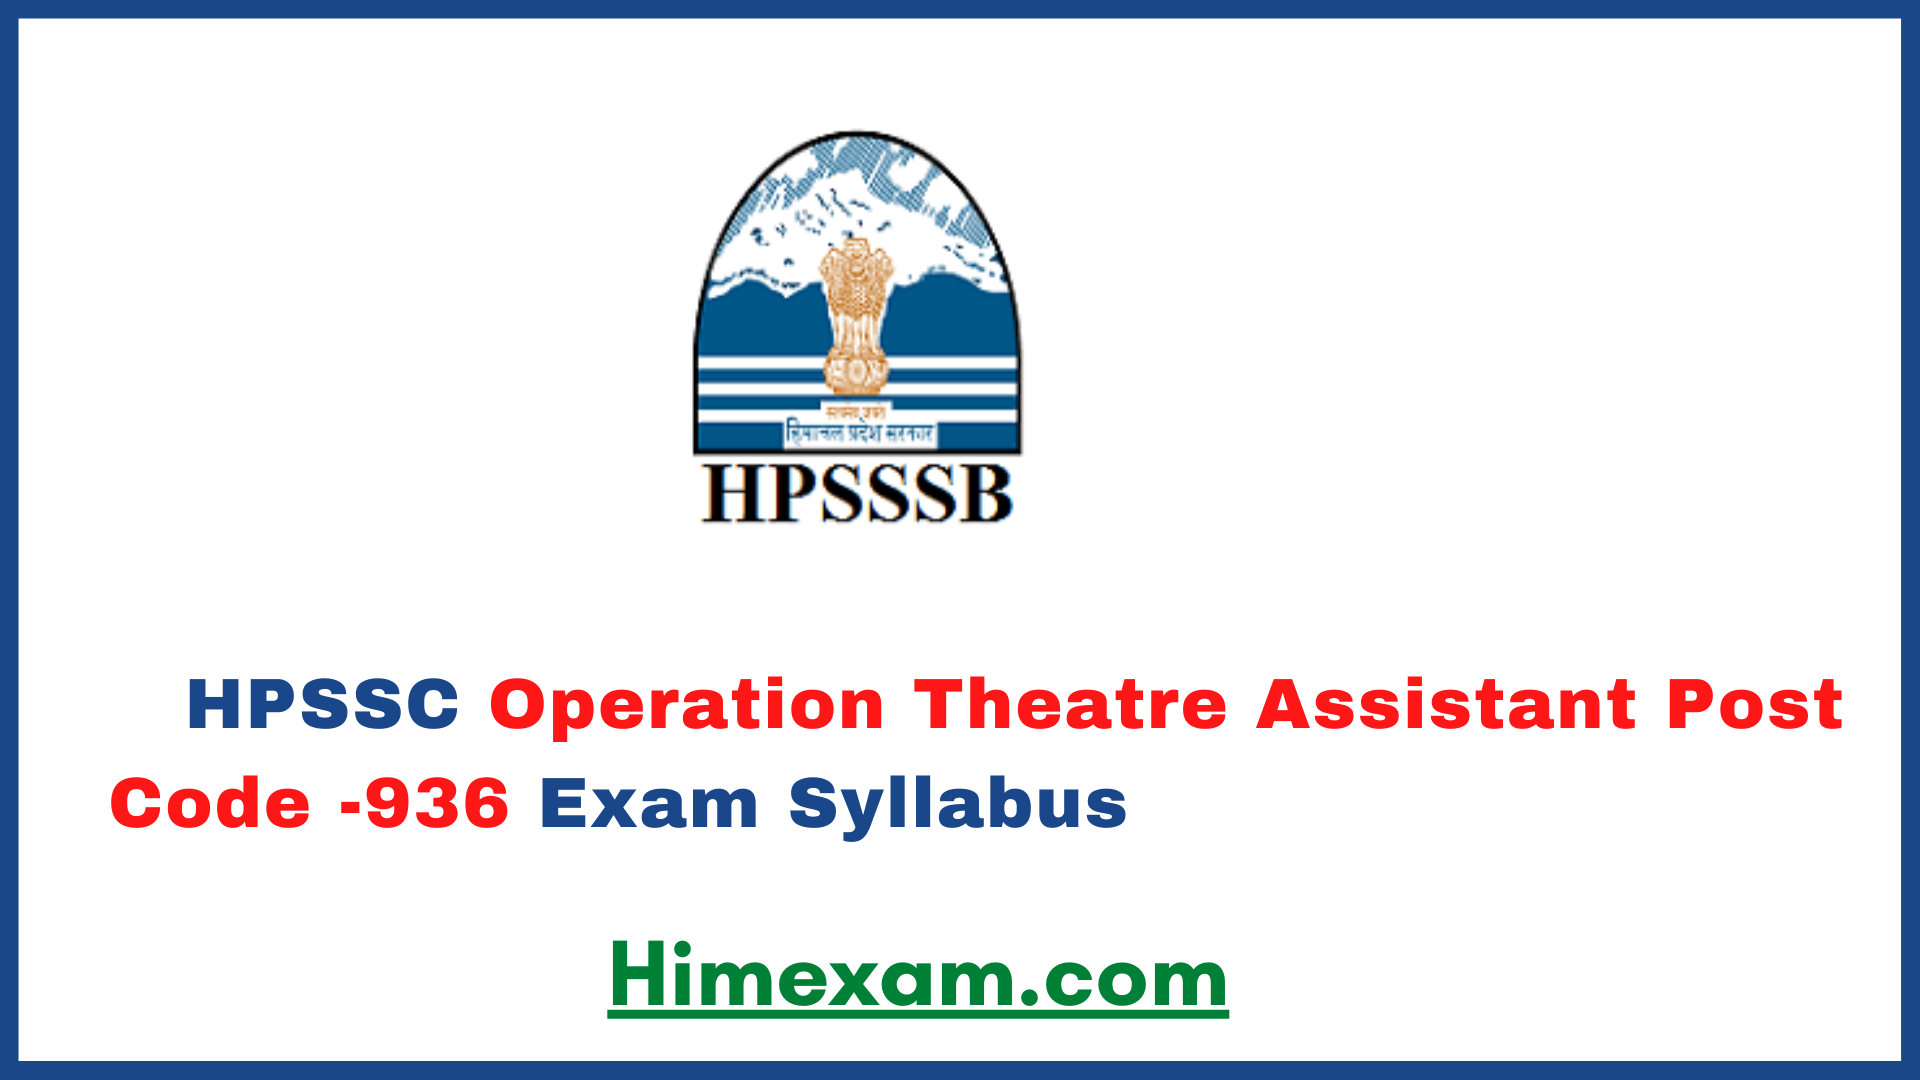 HPSSC Operation Theatre Assistant Post Code -936 Exam Syllabus